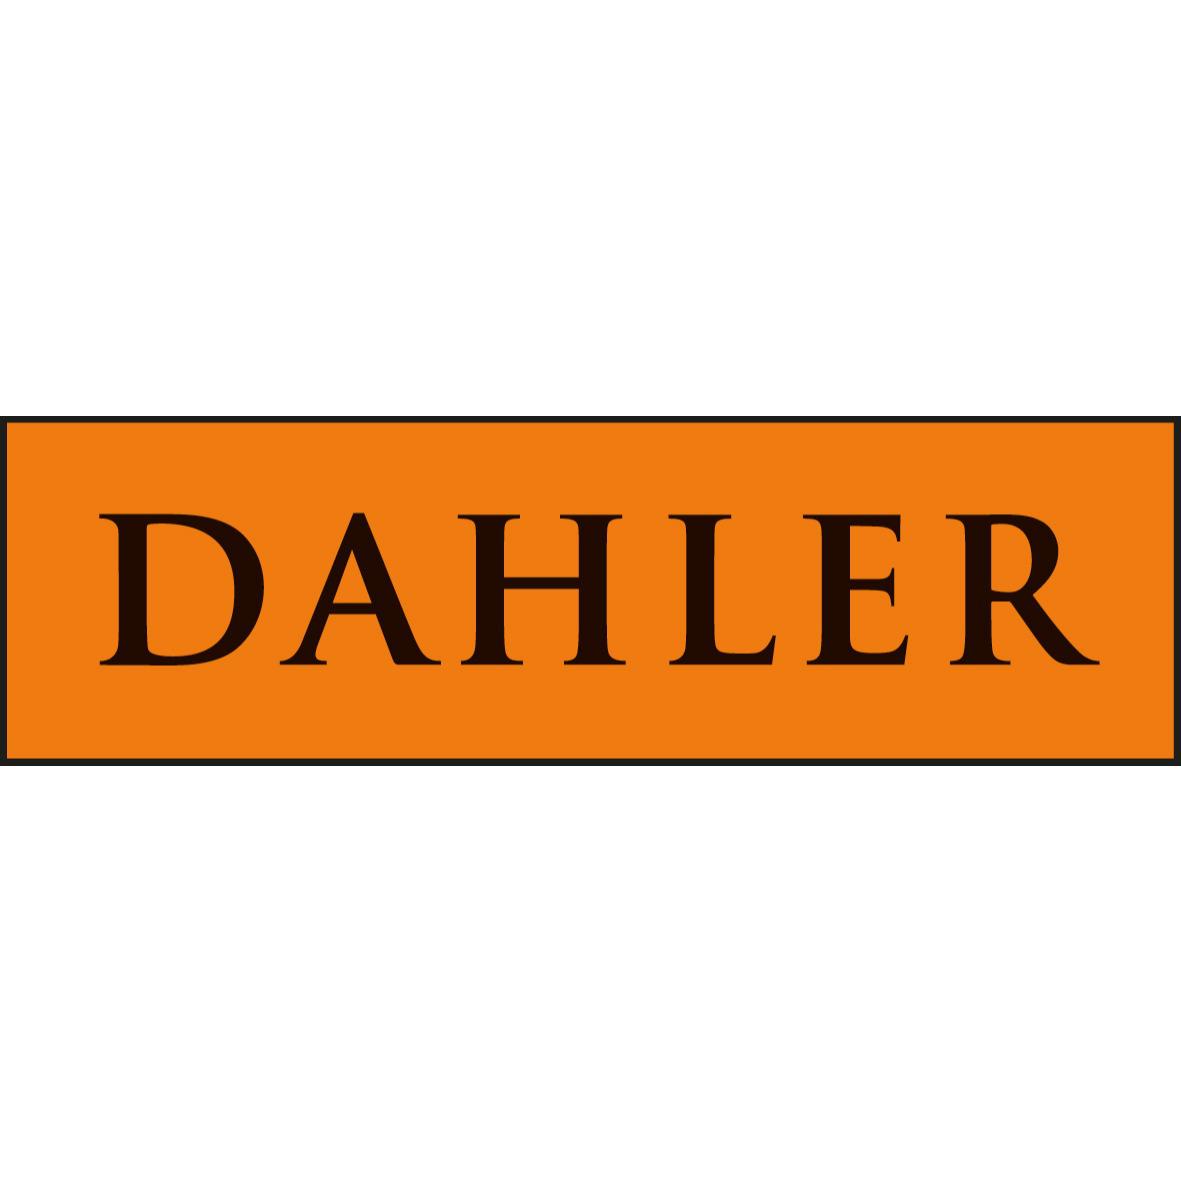 DAHLER Bielefeld/Gütersloh  